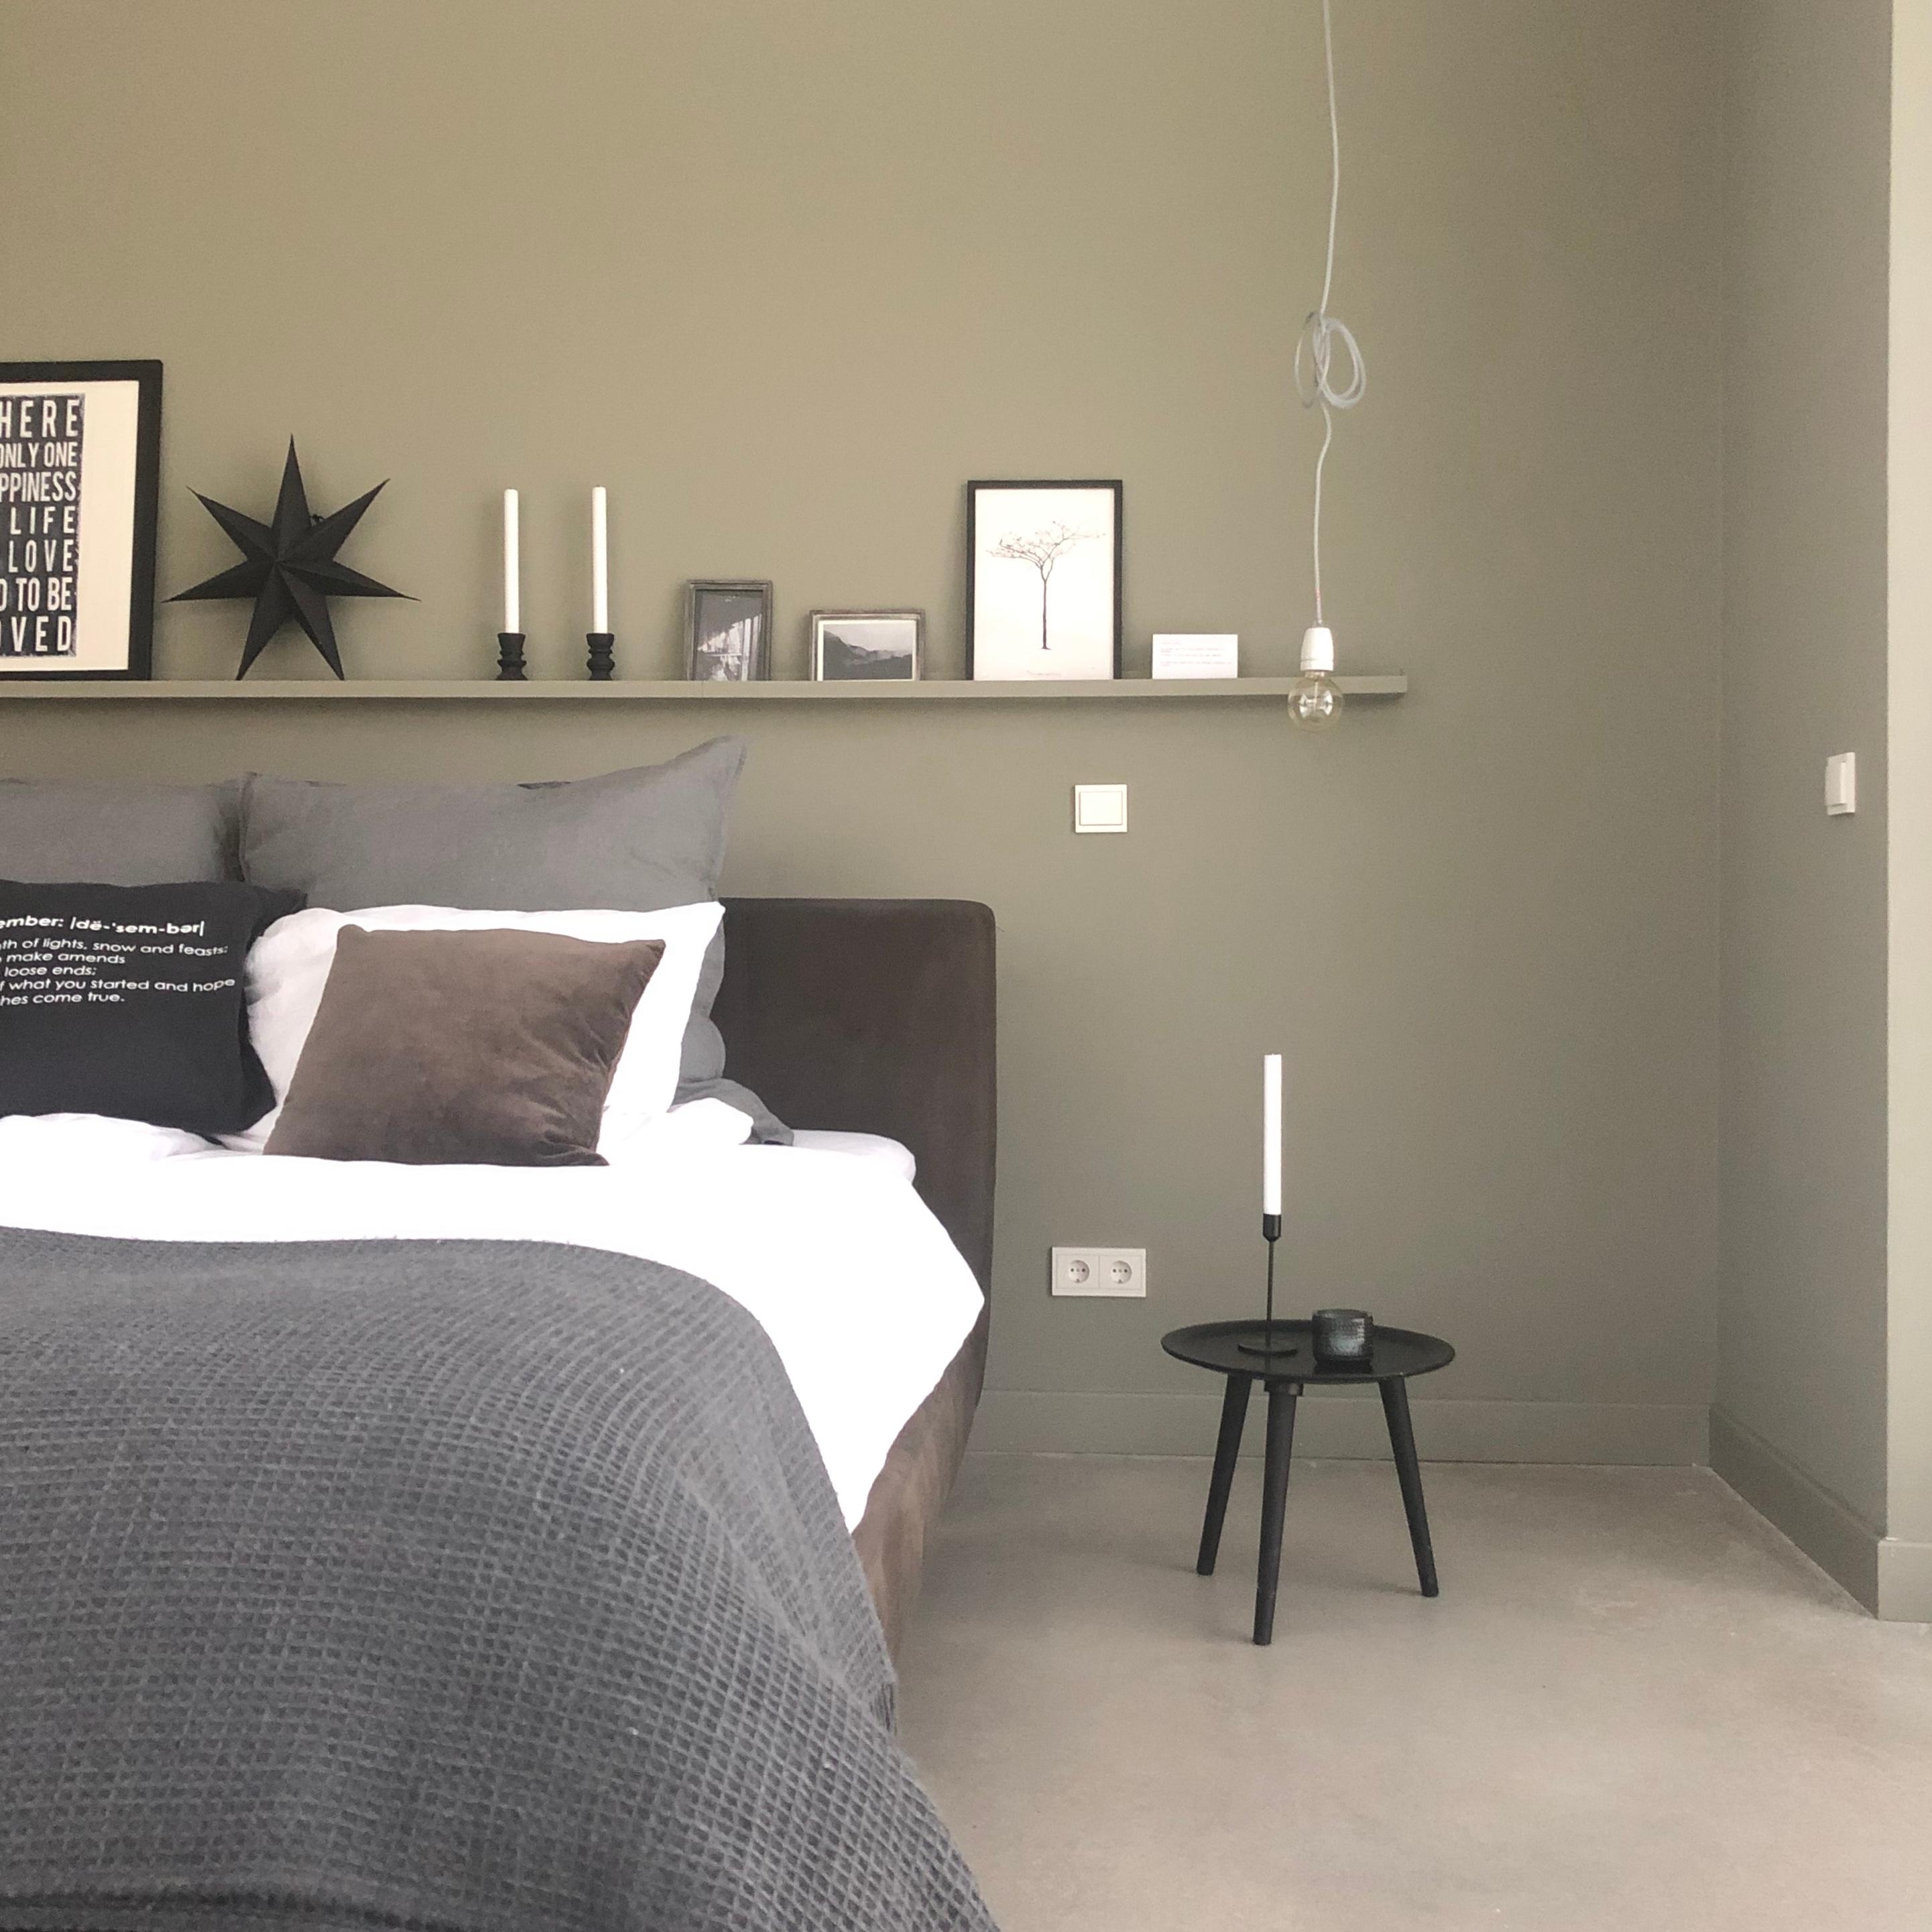 #schlafzimmer #bedroom #minimalistisch #newcolor #toninton #betonboden 

Ich bin so verknallt in die Farbe 🖤